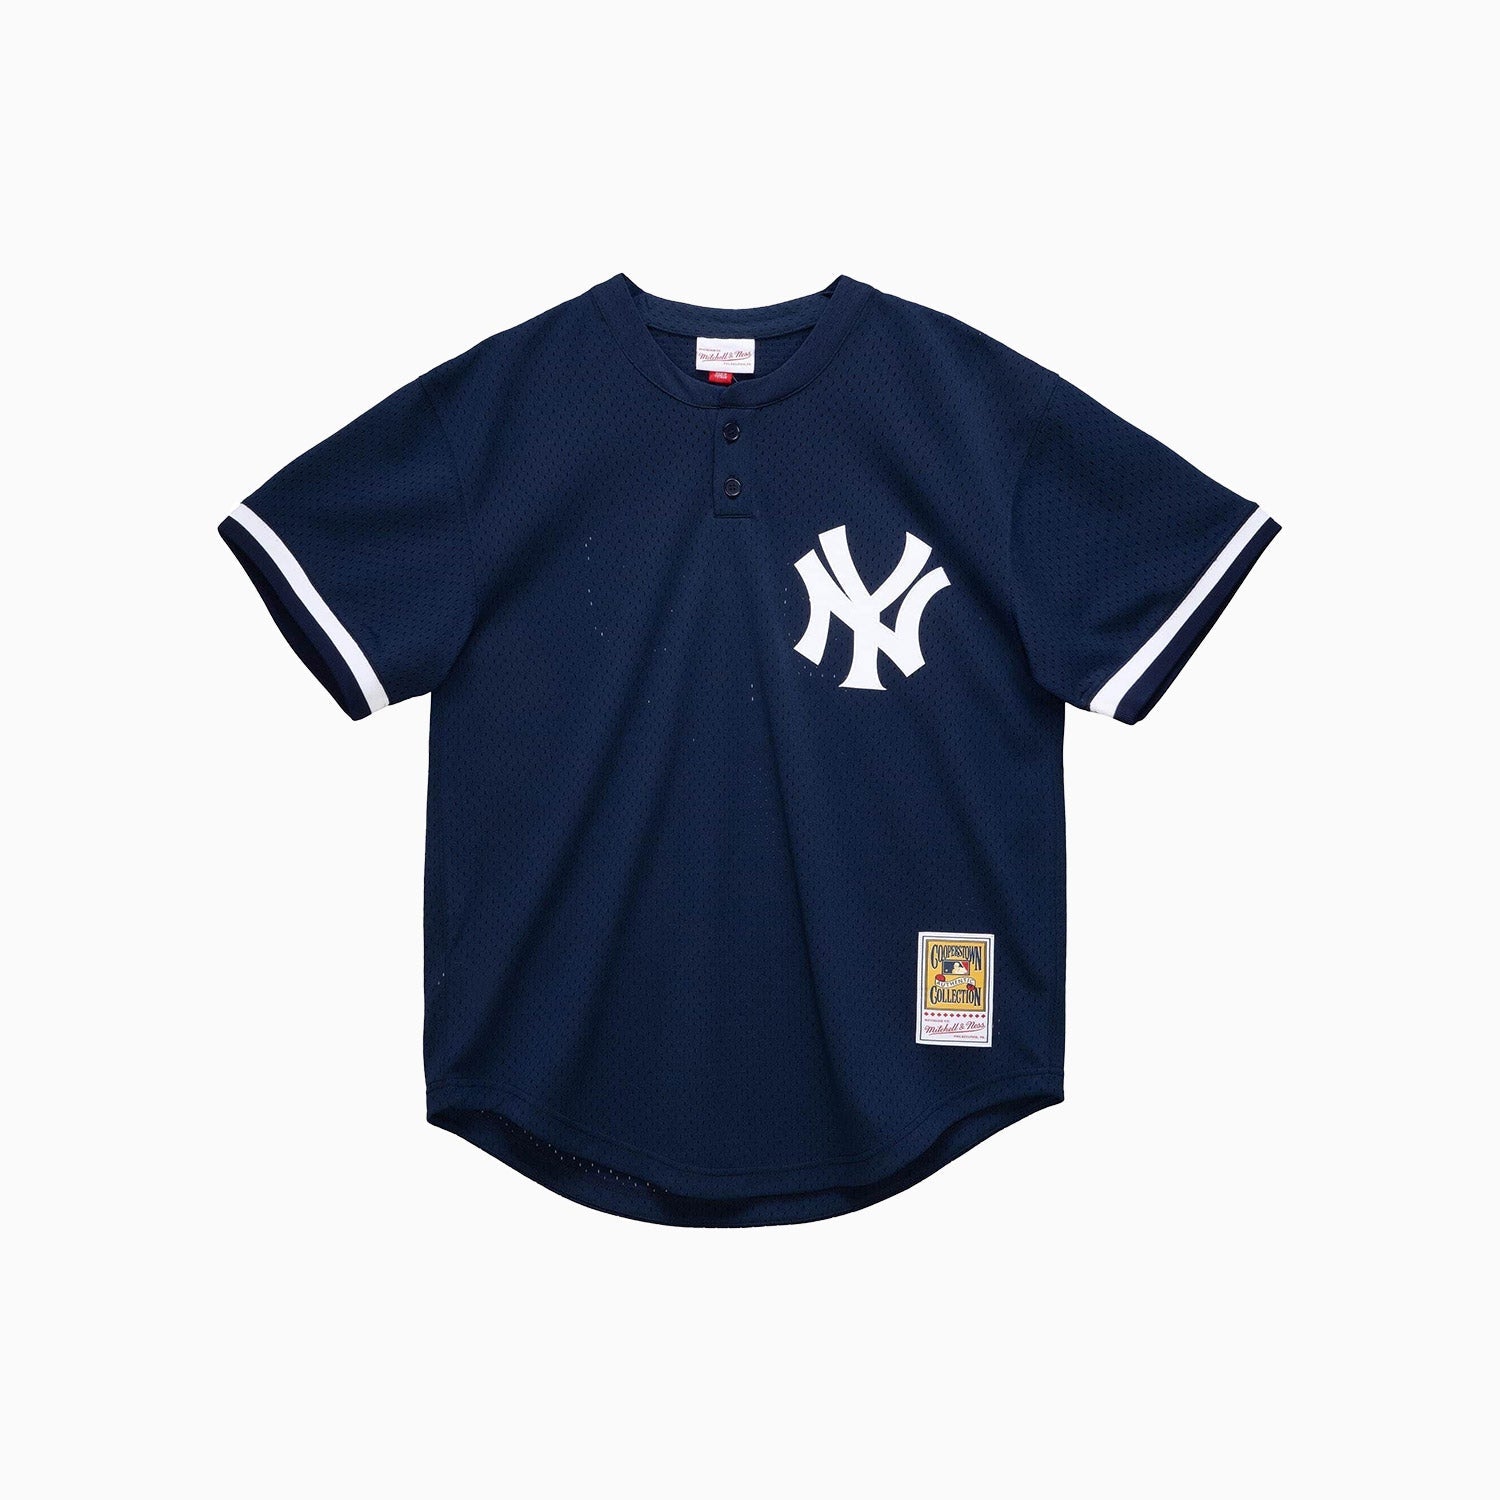 Men's Nike Derek Jeter Navy New York Yankees Gold Name & Number T-Shirt